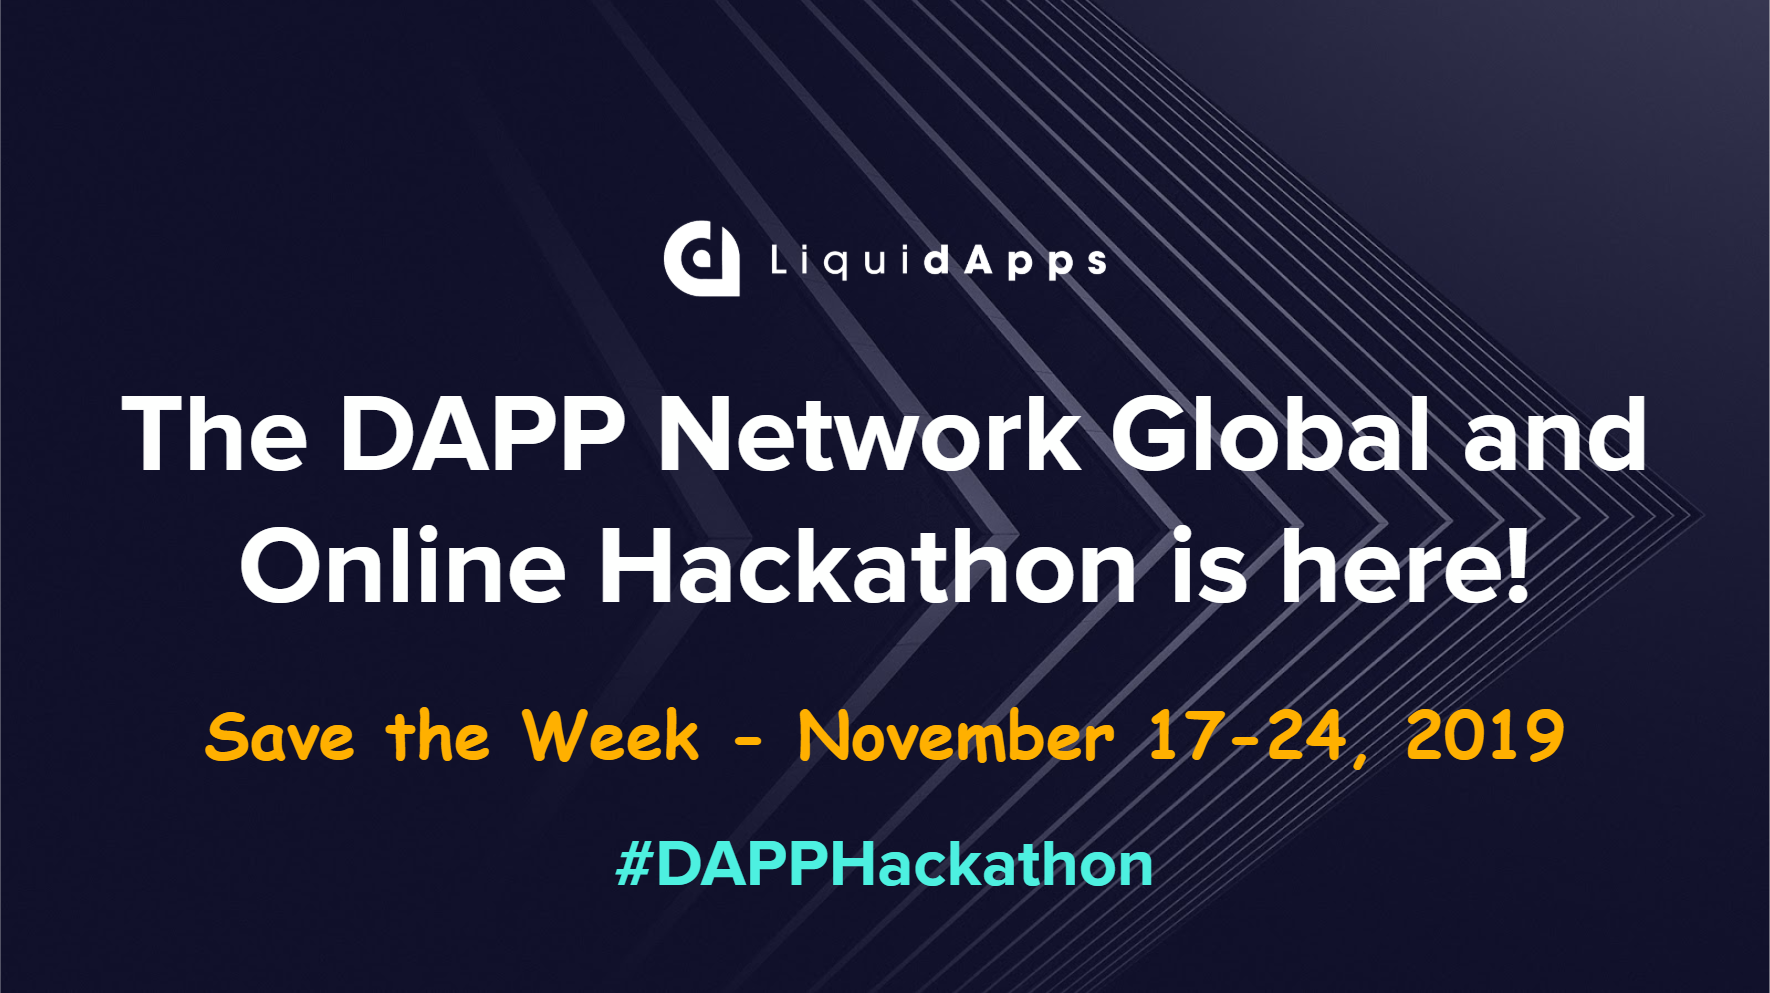 liquidapps-announced-the-first-dapp-network-hackathon